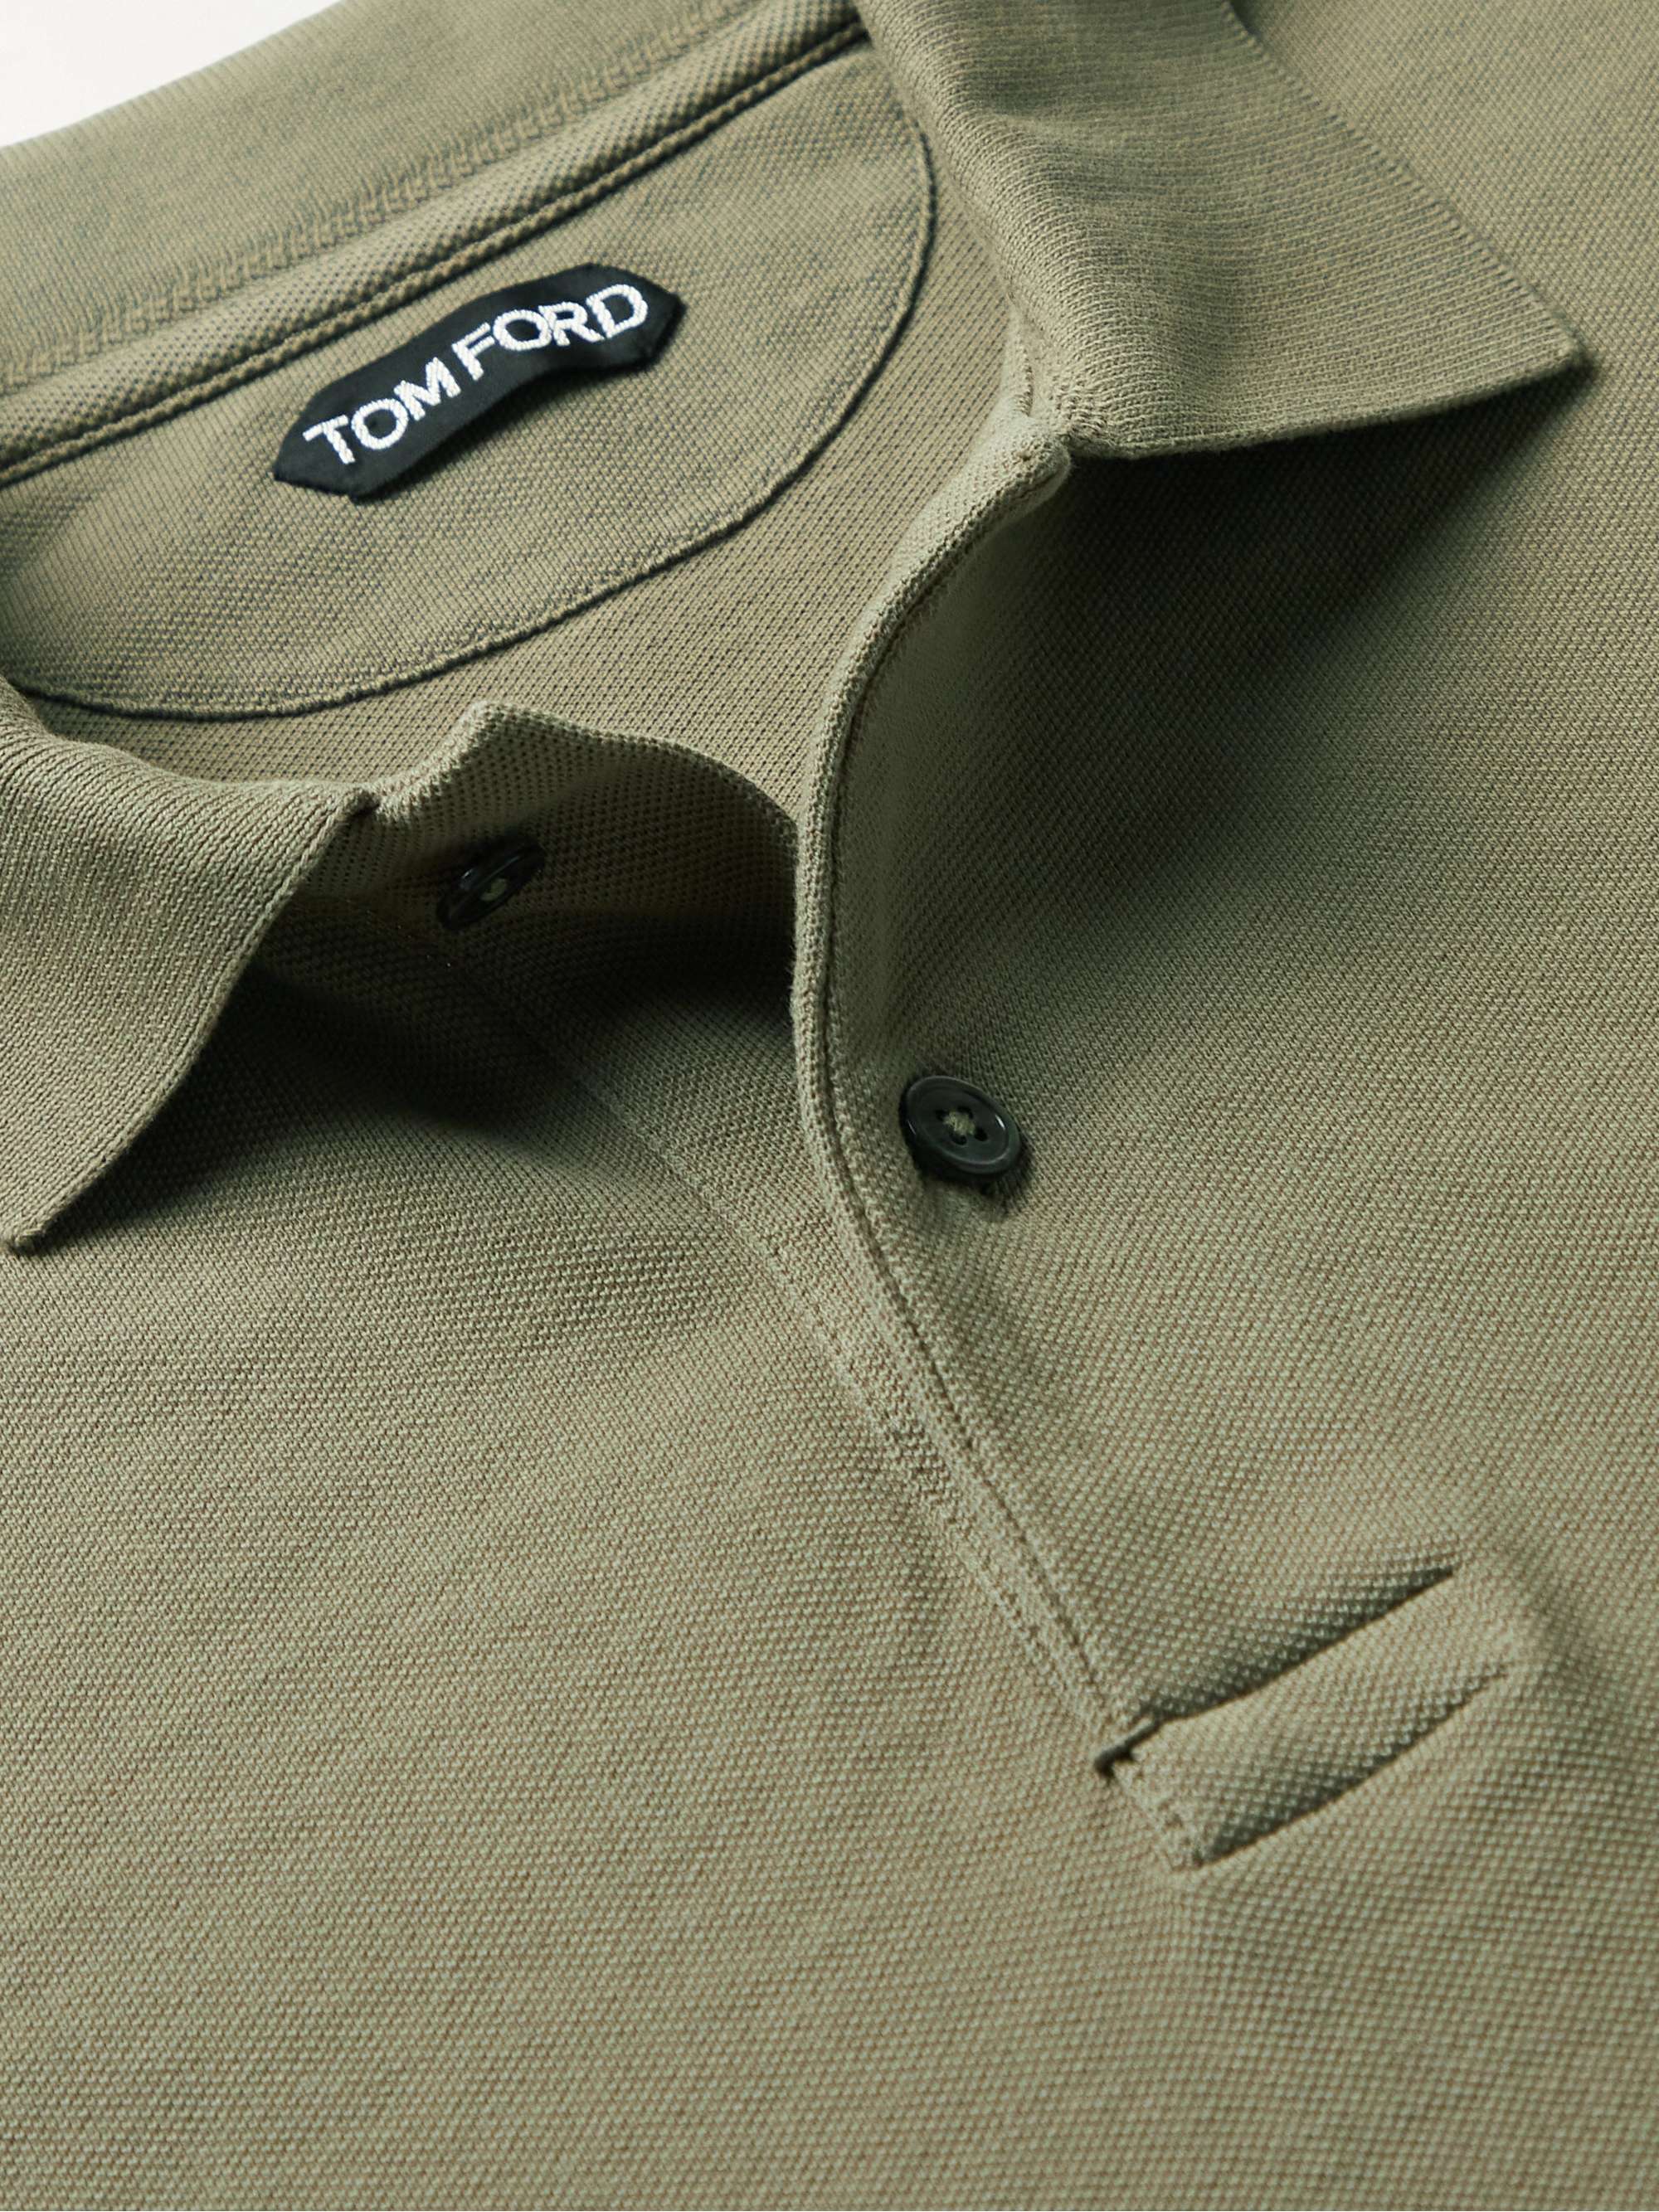 TOM FORD Garment-Dyed Cotton-Piqué Polo Shirt